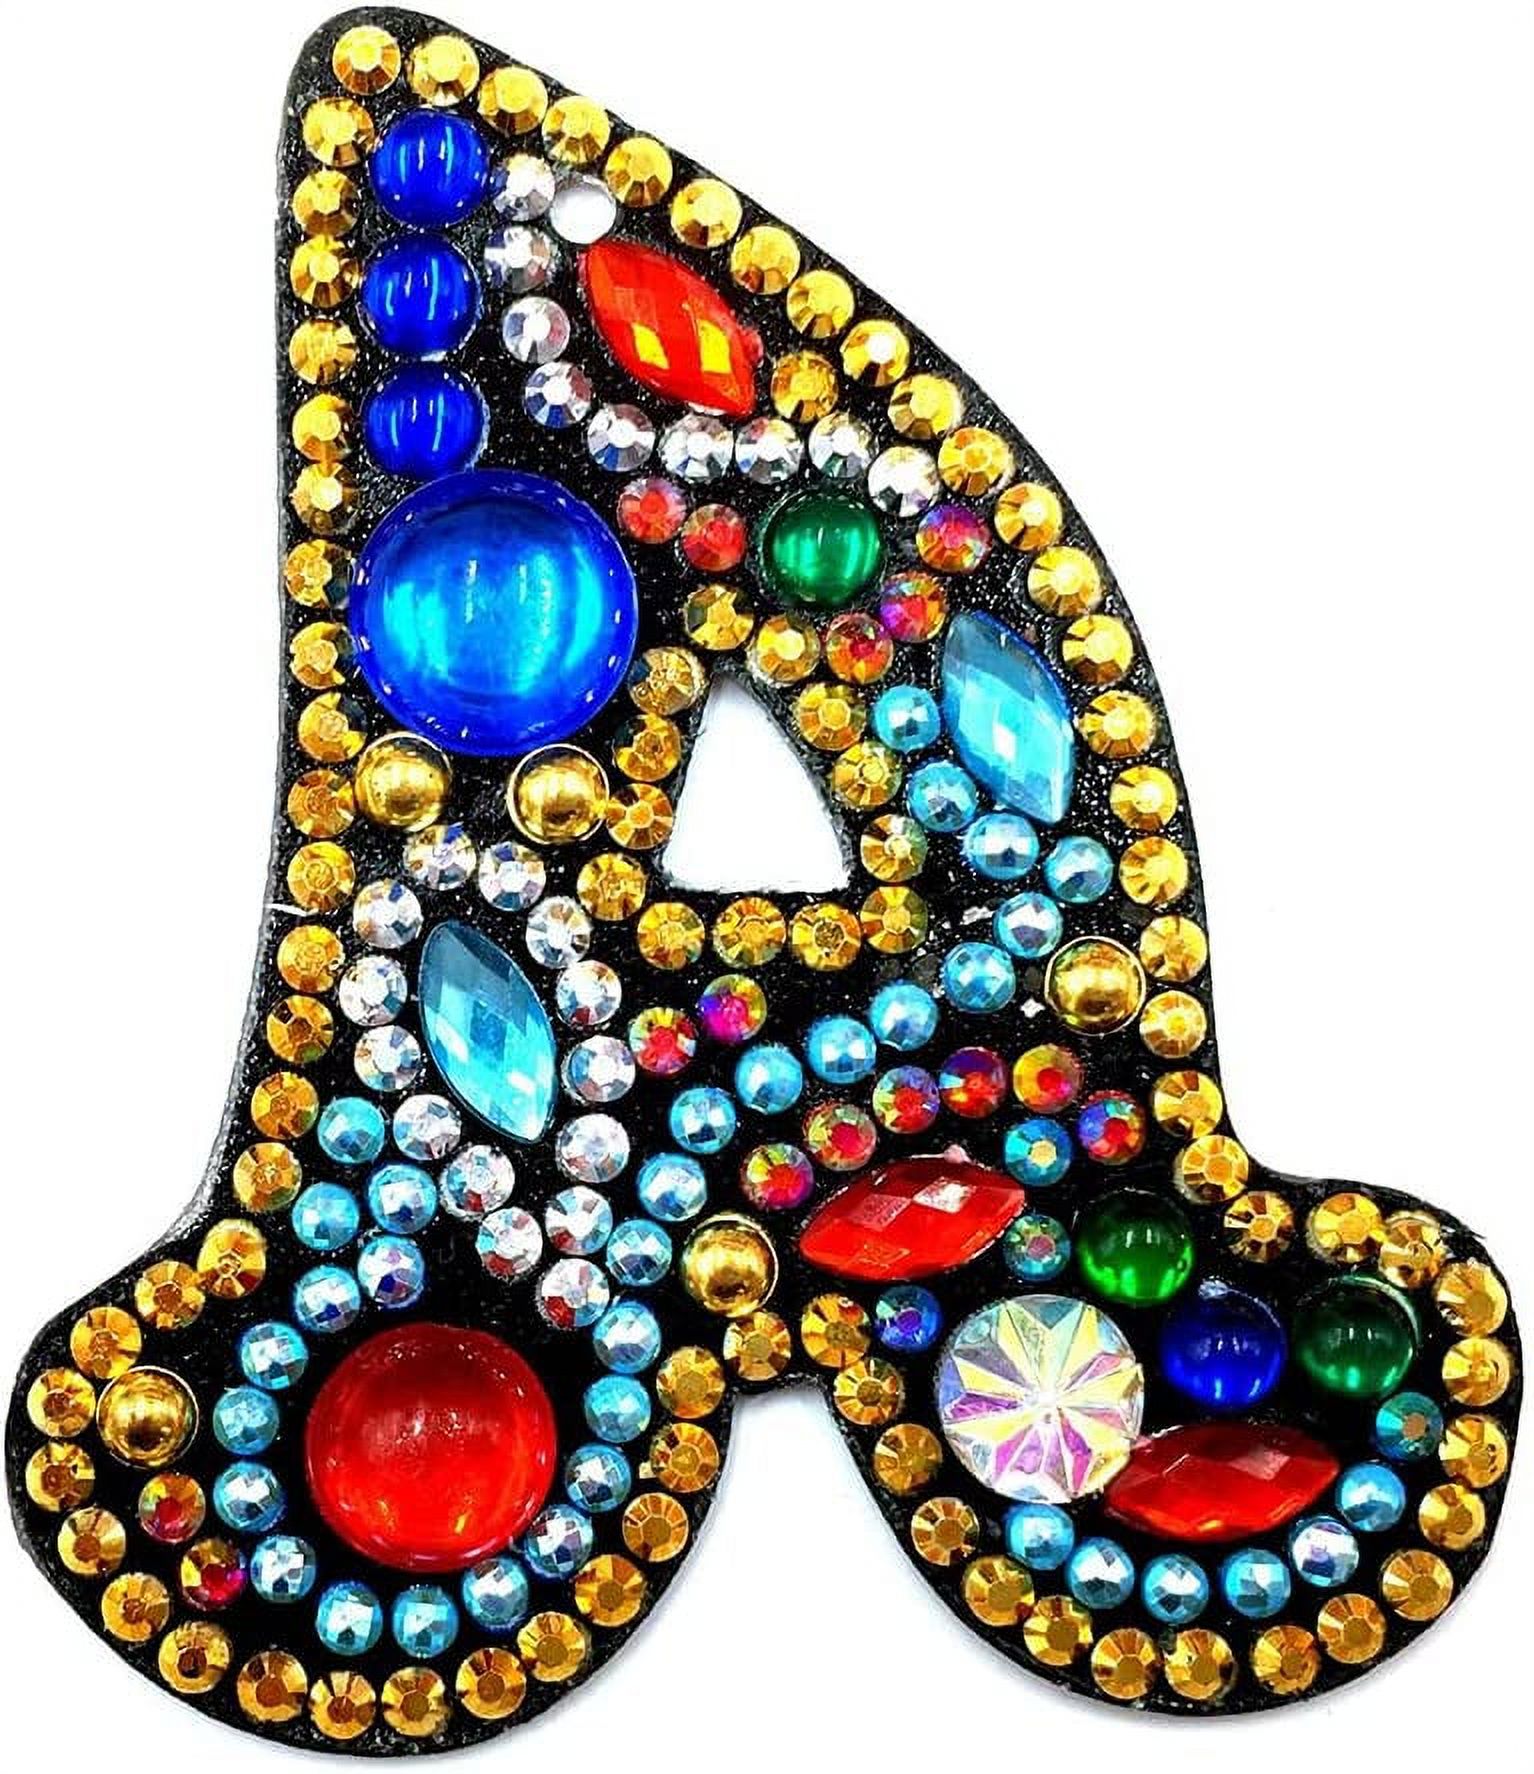 Pikadingnis Diamond Painting Keychains 5D Diamond Art Key Rings Creative 26 English Letters Pattern Pendant Double Sided Diamond Keychain DIY Crafts